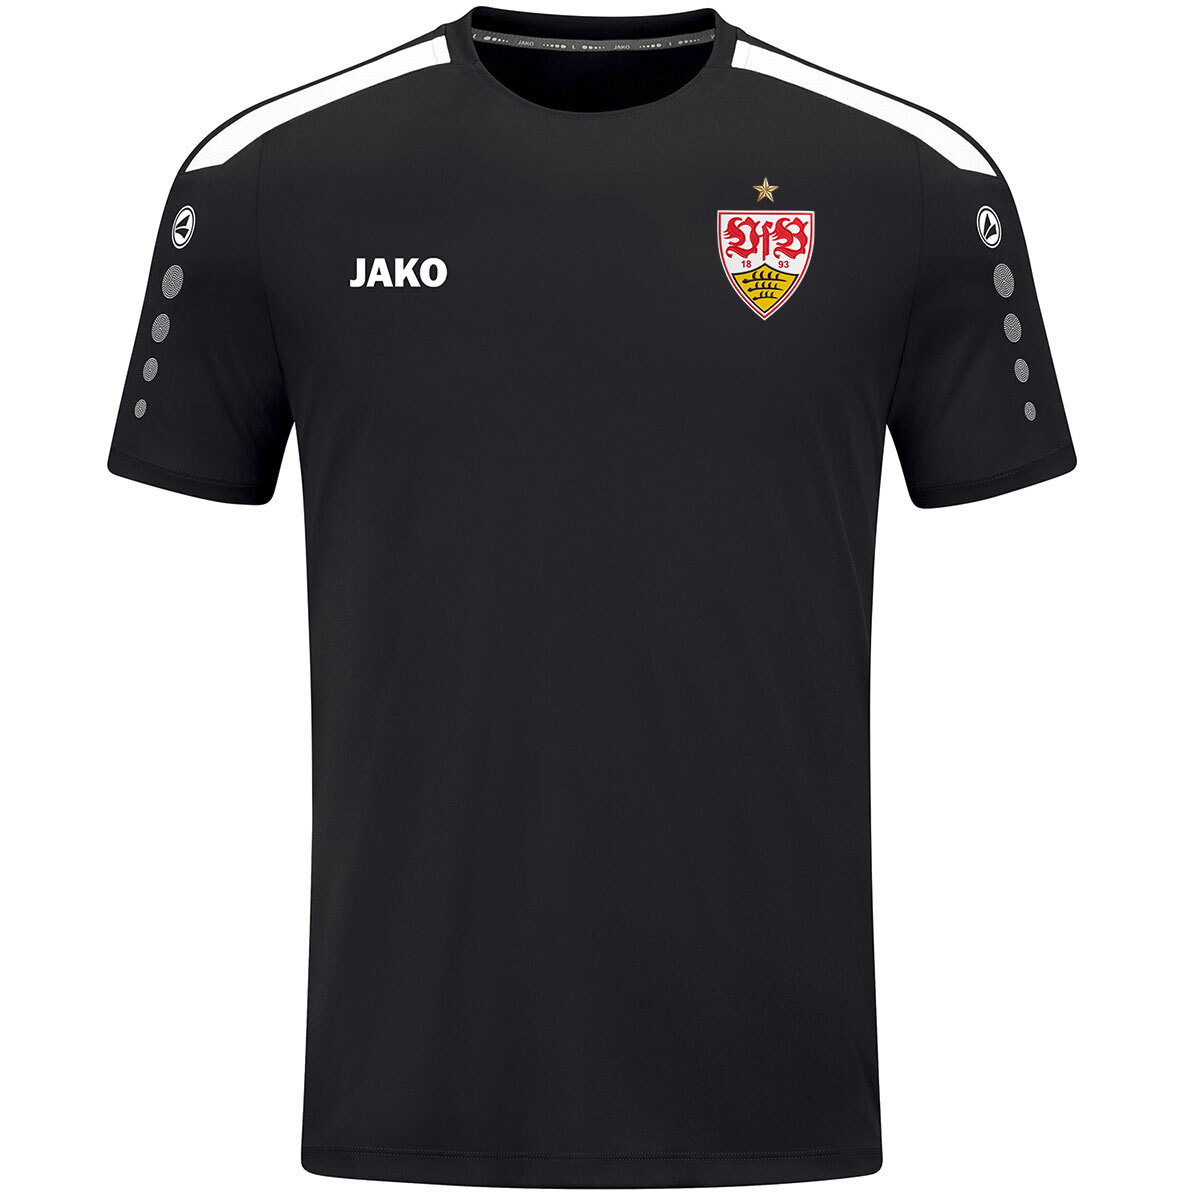 Jako VfB Stuttgart T-Shirt Power Kids